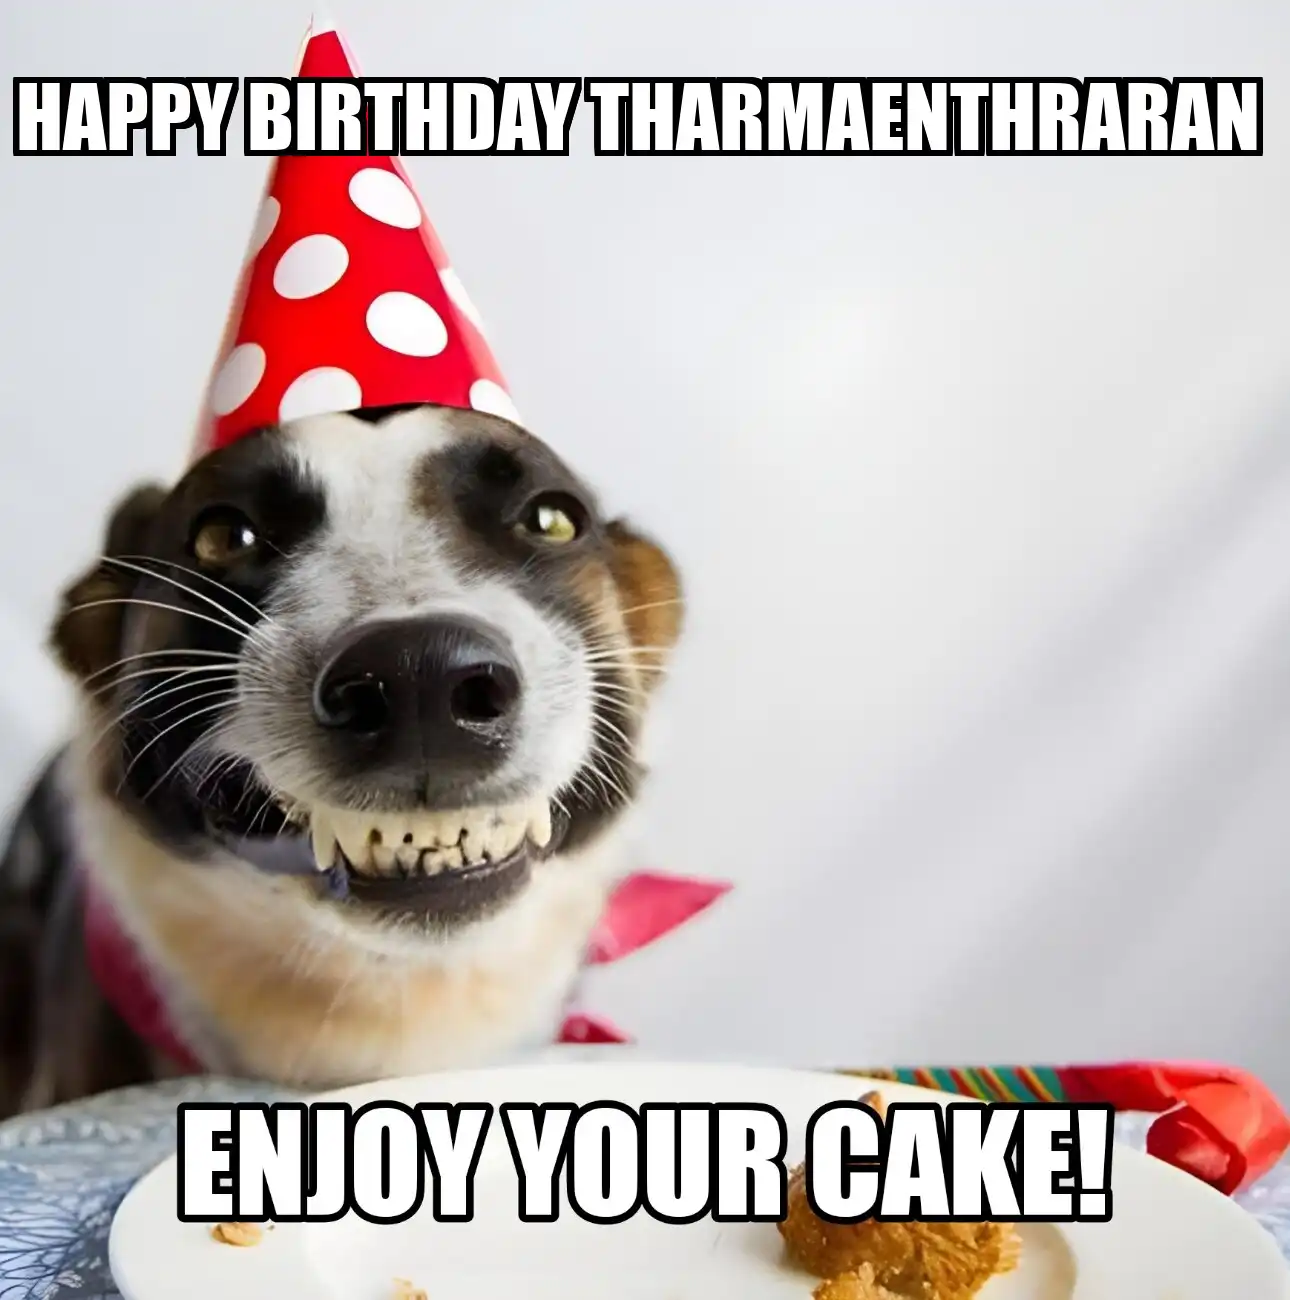 Happy Birthday Tharmaenthraran Enjoy Your Cake Dog Meme